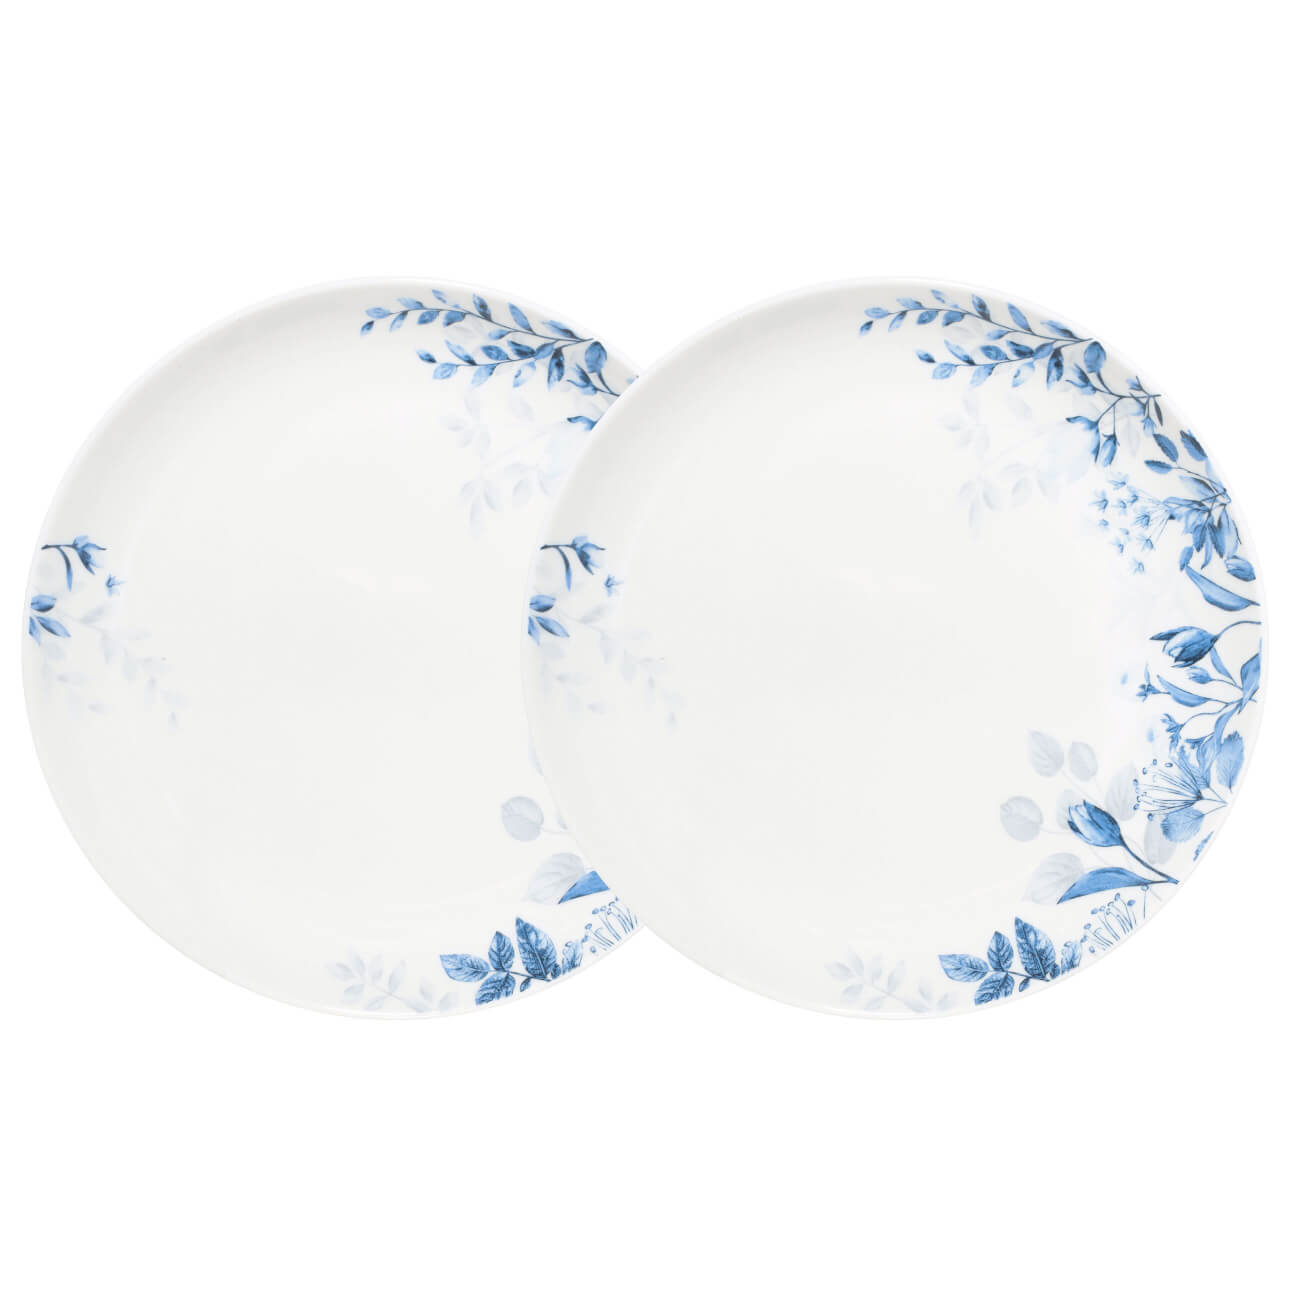 Тарелка закусочная, 21 см, 2 шт, фарфор N, белая, Синие цветы, Royal flower летающая тарелка фрисби